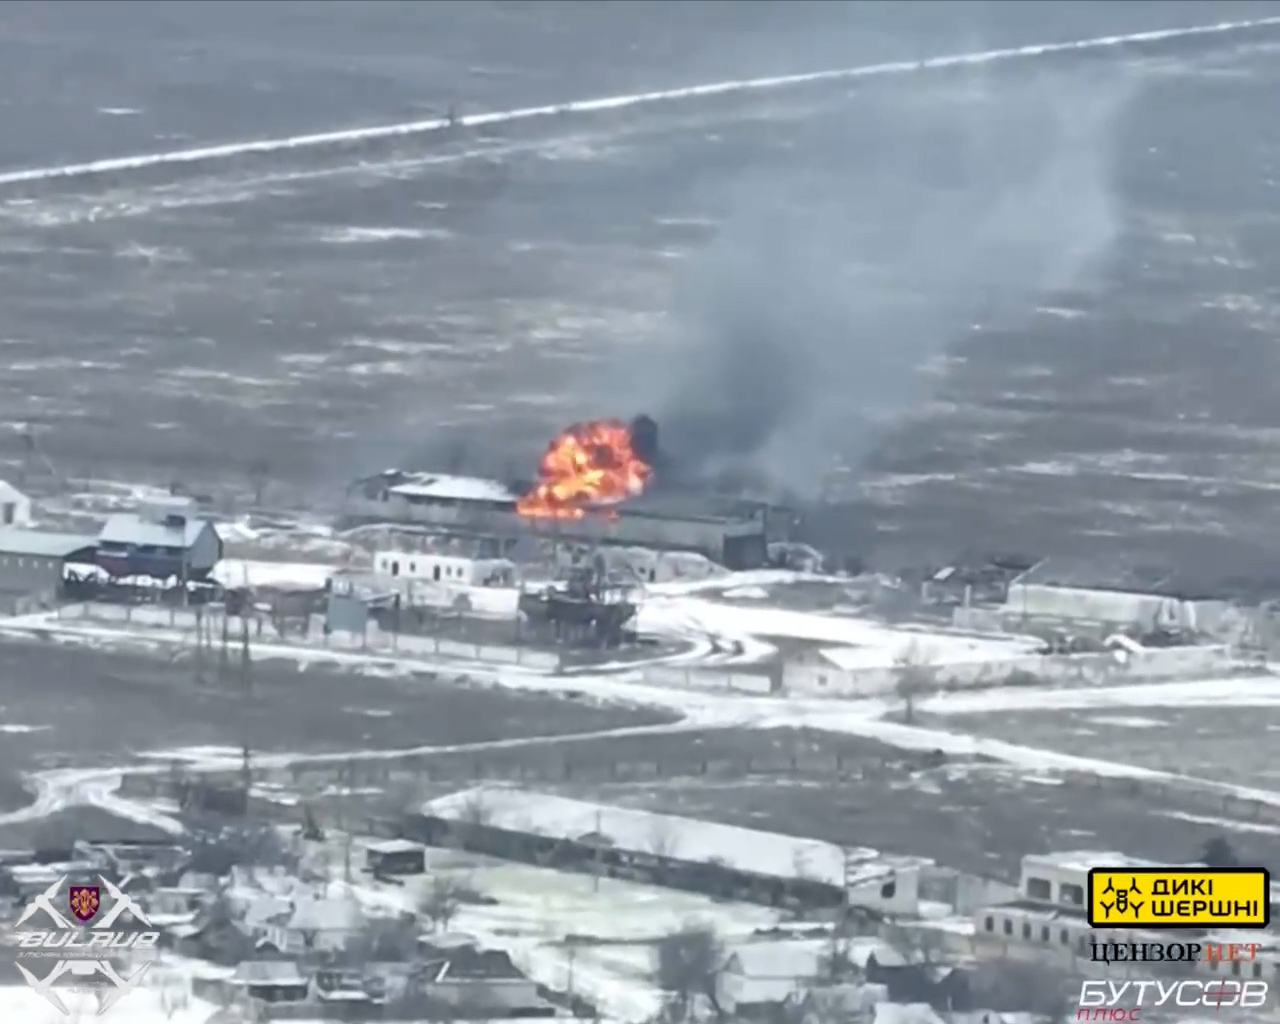 Defenders of Ukraine Destroy russian Base Full of Tanks, Using FPV-Drones, Defense Express